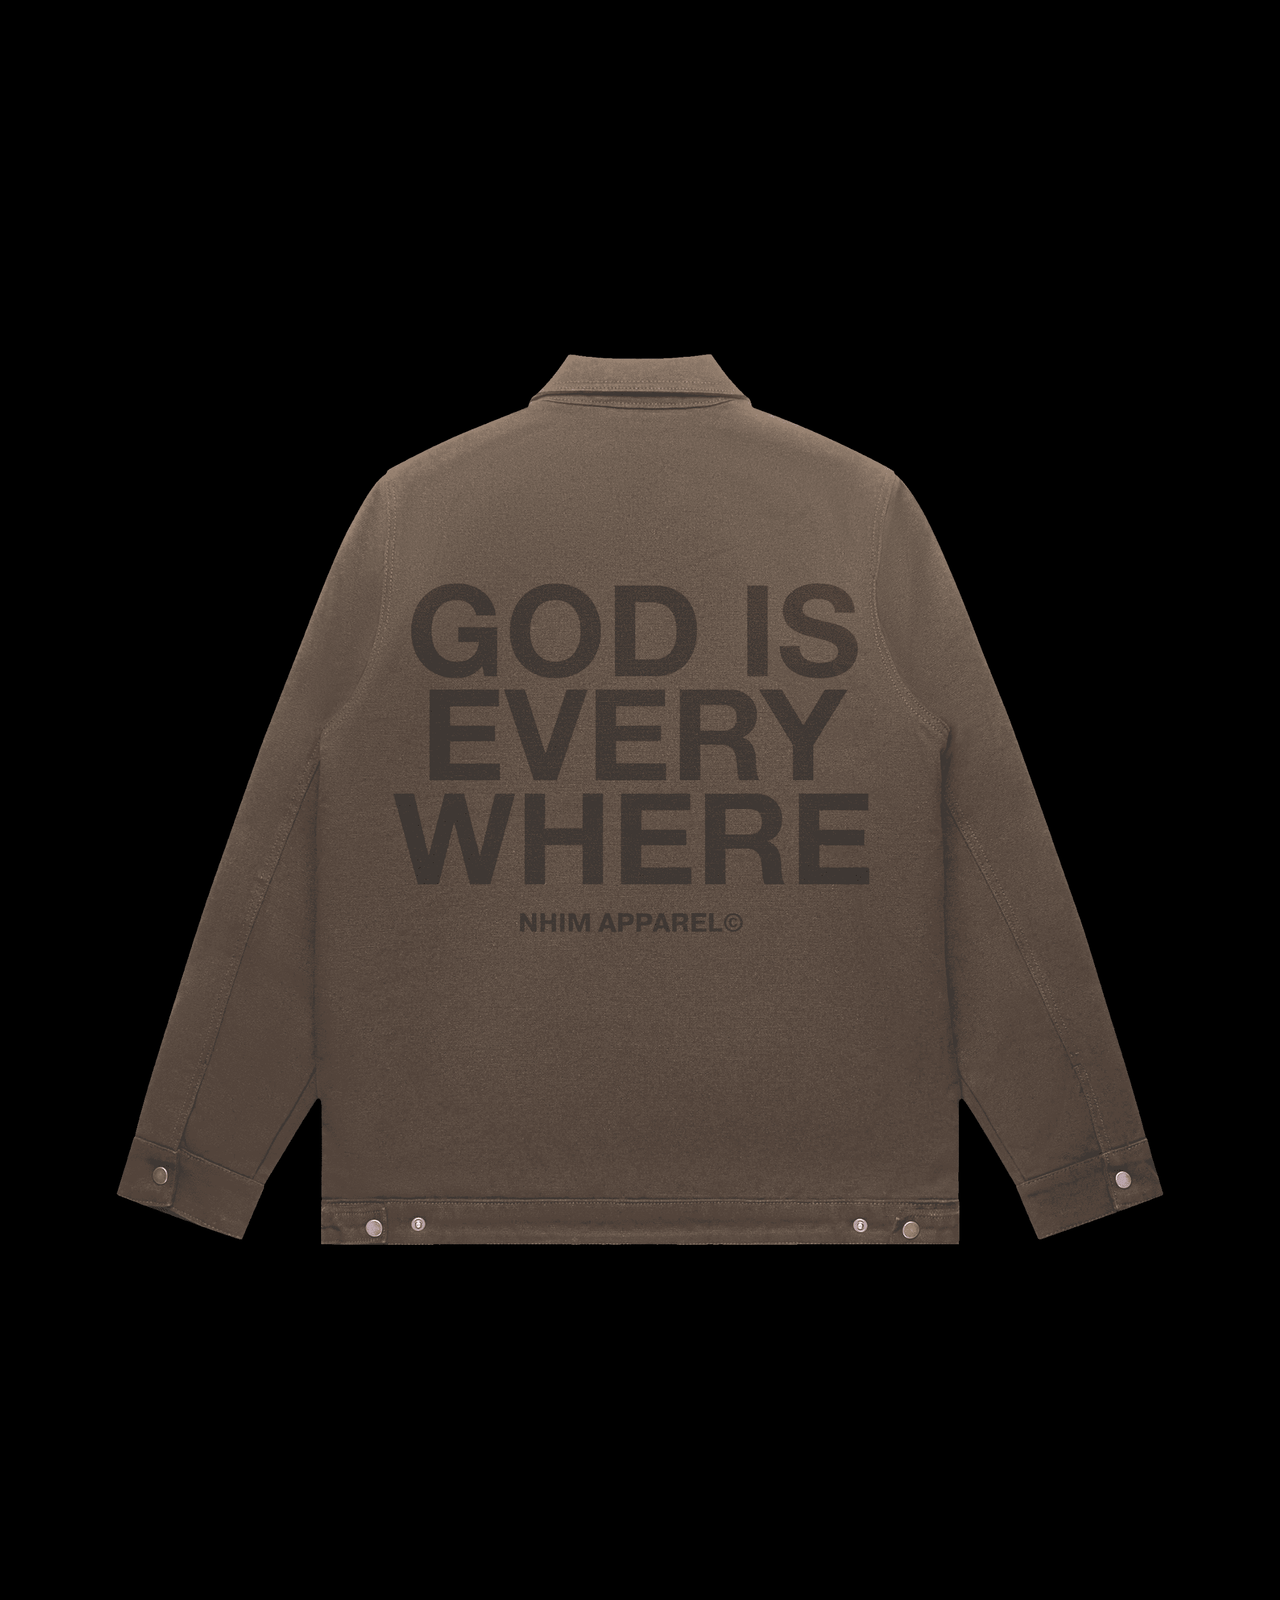 God Is Everywhere Work Jacket in Vintage Brown by NHIM Apparel Christian Clothing Brand